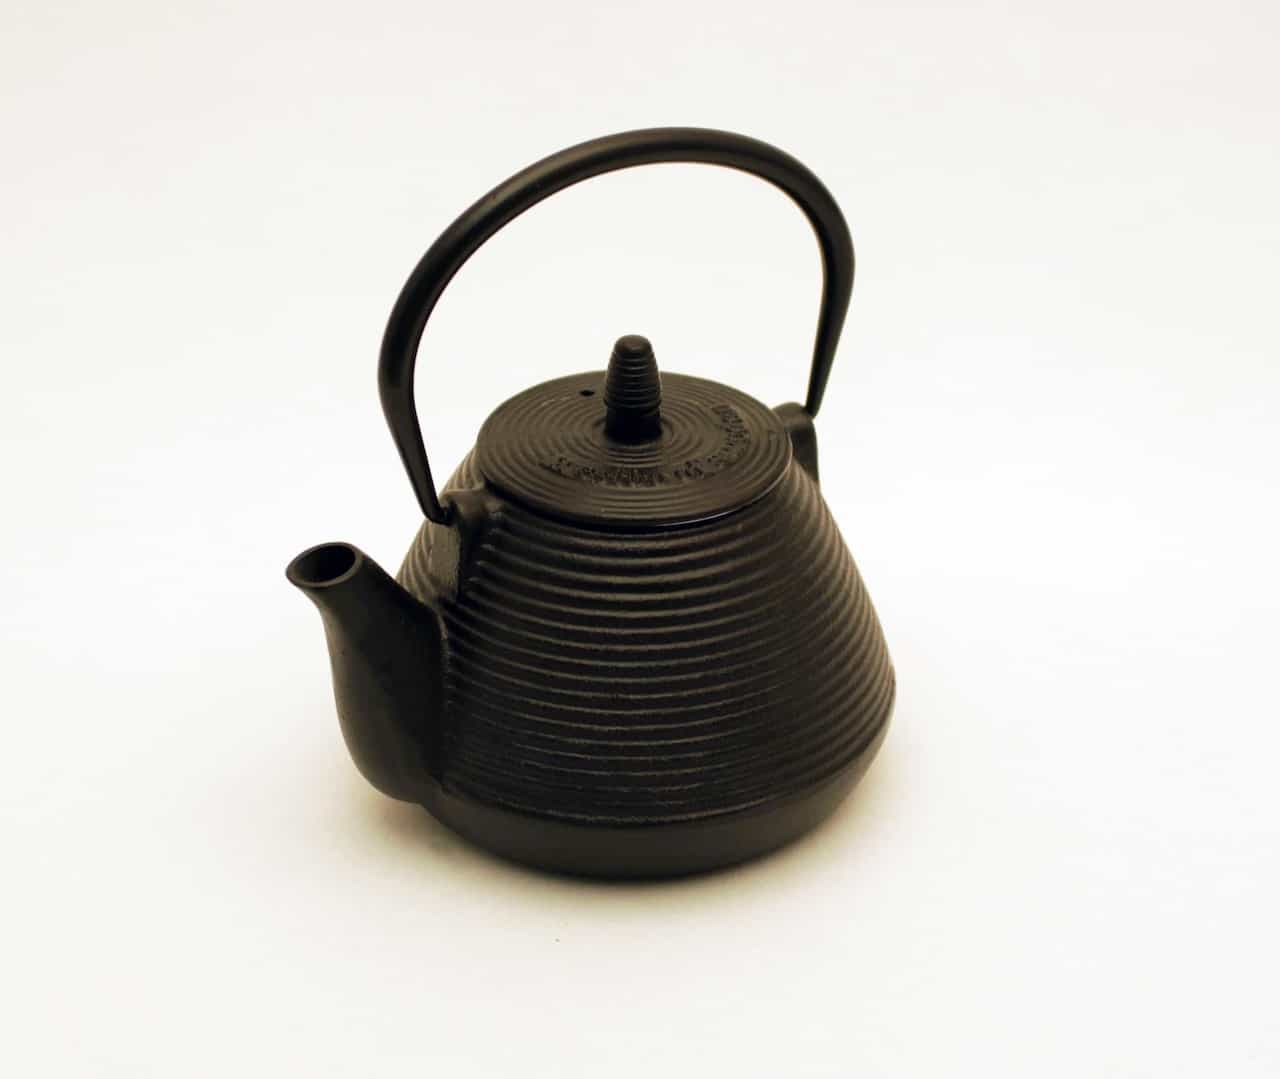 Teekanne mit Teesieb aus Gusseisen 0,7ltr